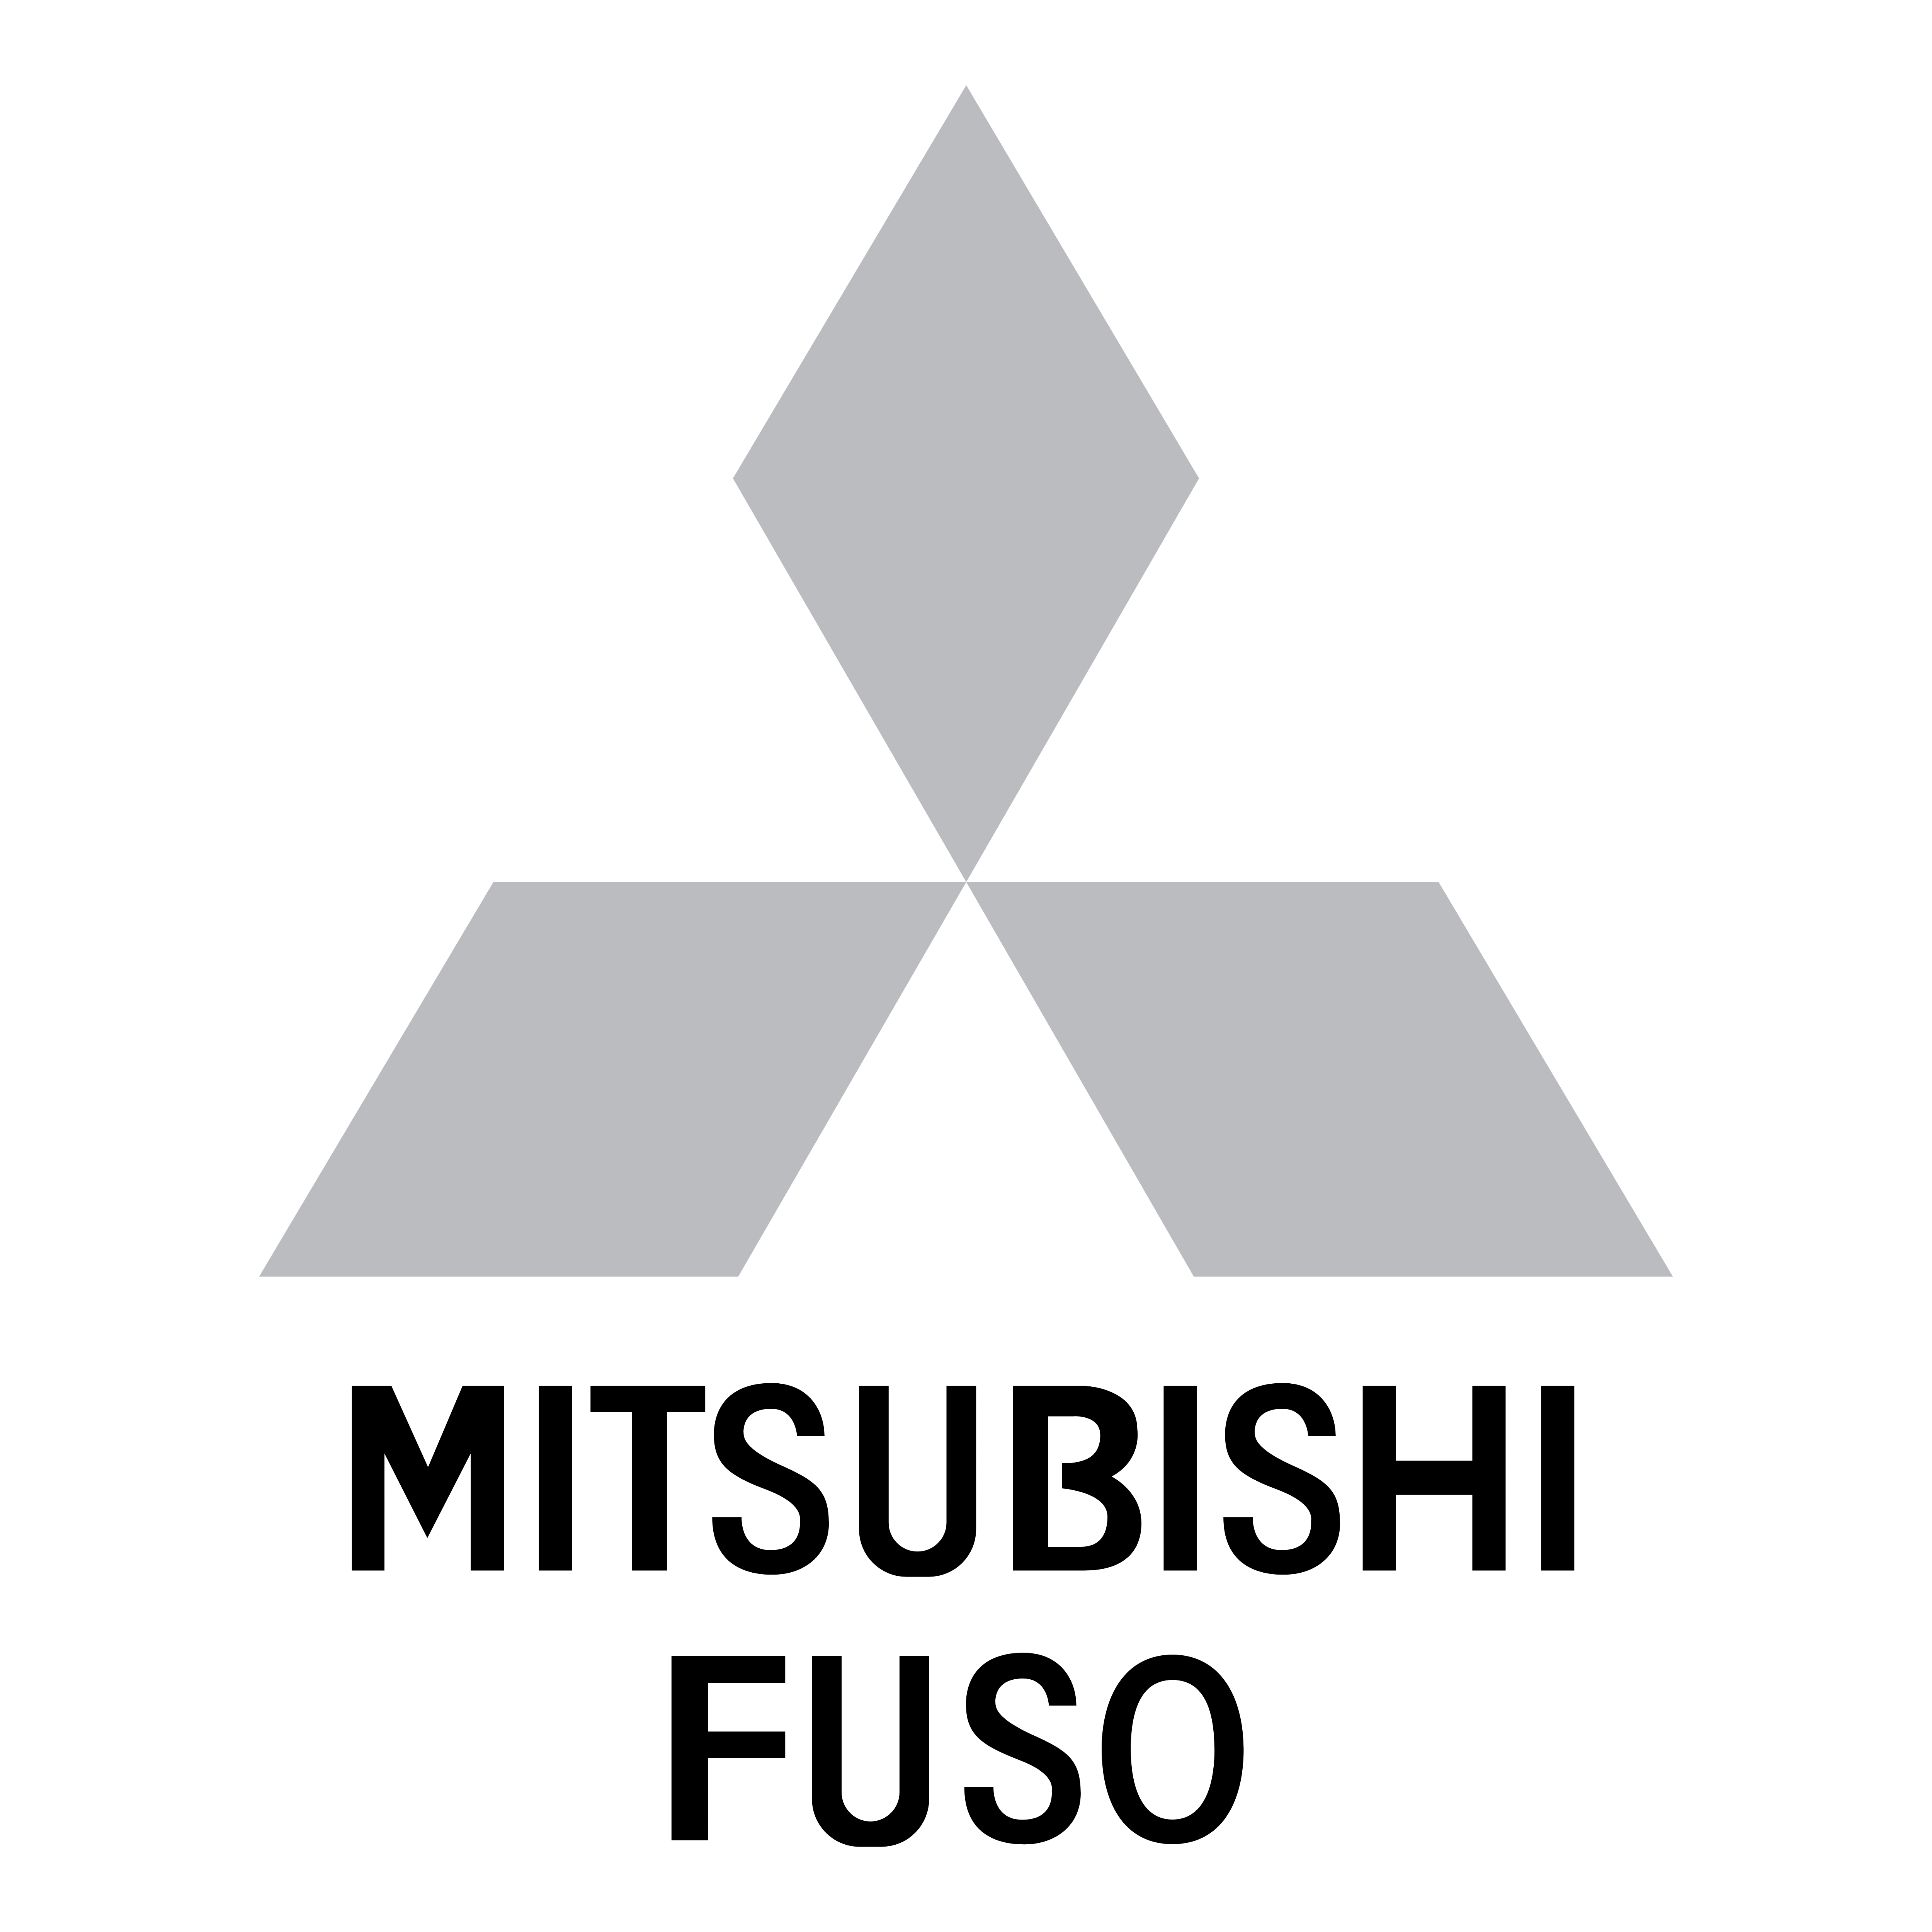 Логотип mitsubishi. Эмблема Мицубиси. Логотип Mitsubishi Motors. Логотип Митсубиси Фусо. Мицубиси логотип вектор.